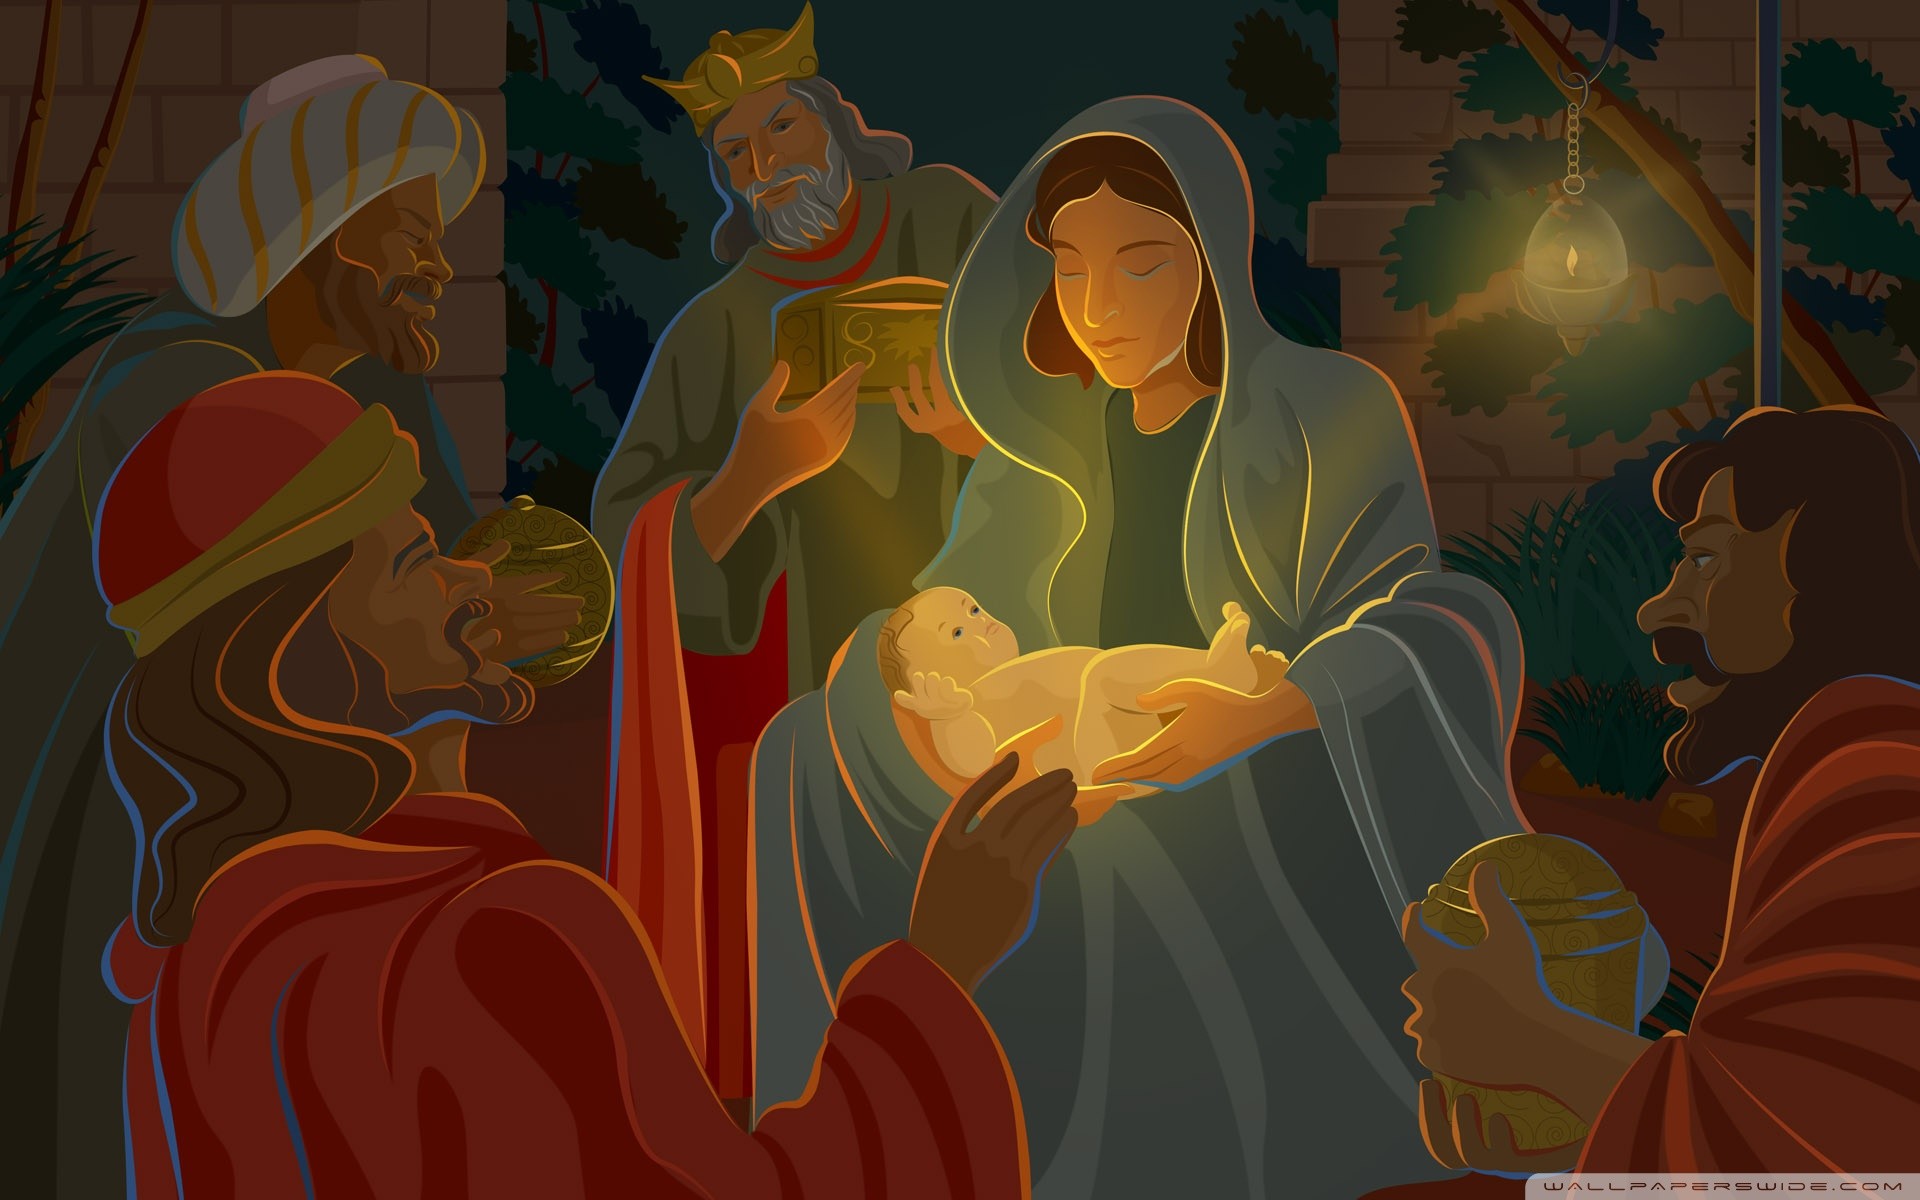 Festive Christmas CG – Digital Christmas illustration – Illustration – Nativity scene – The Birth of Jesus 25